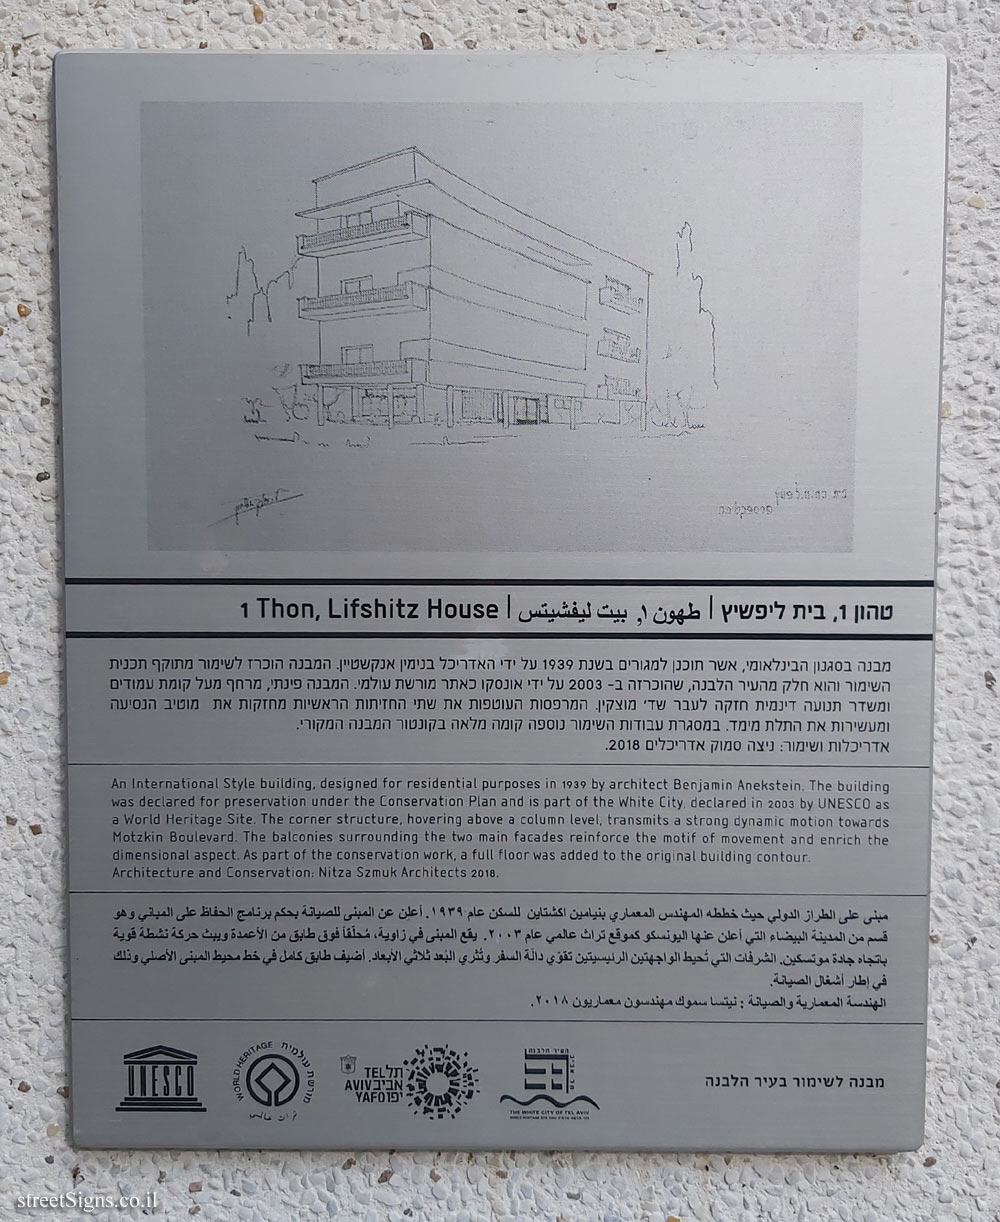 Tel Aviv - buildings for conservation - 1 Thon, Lifshitz House